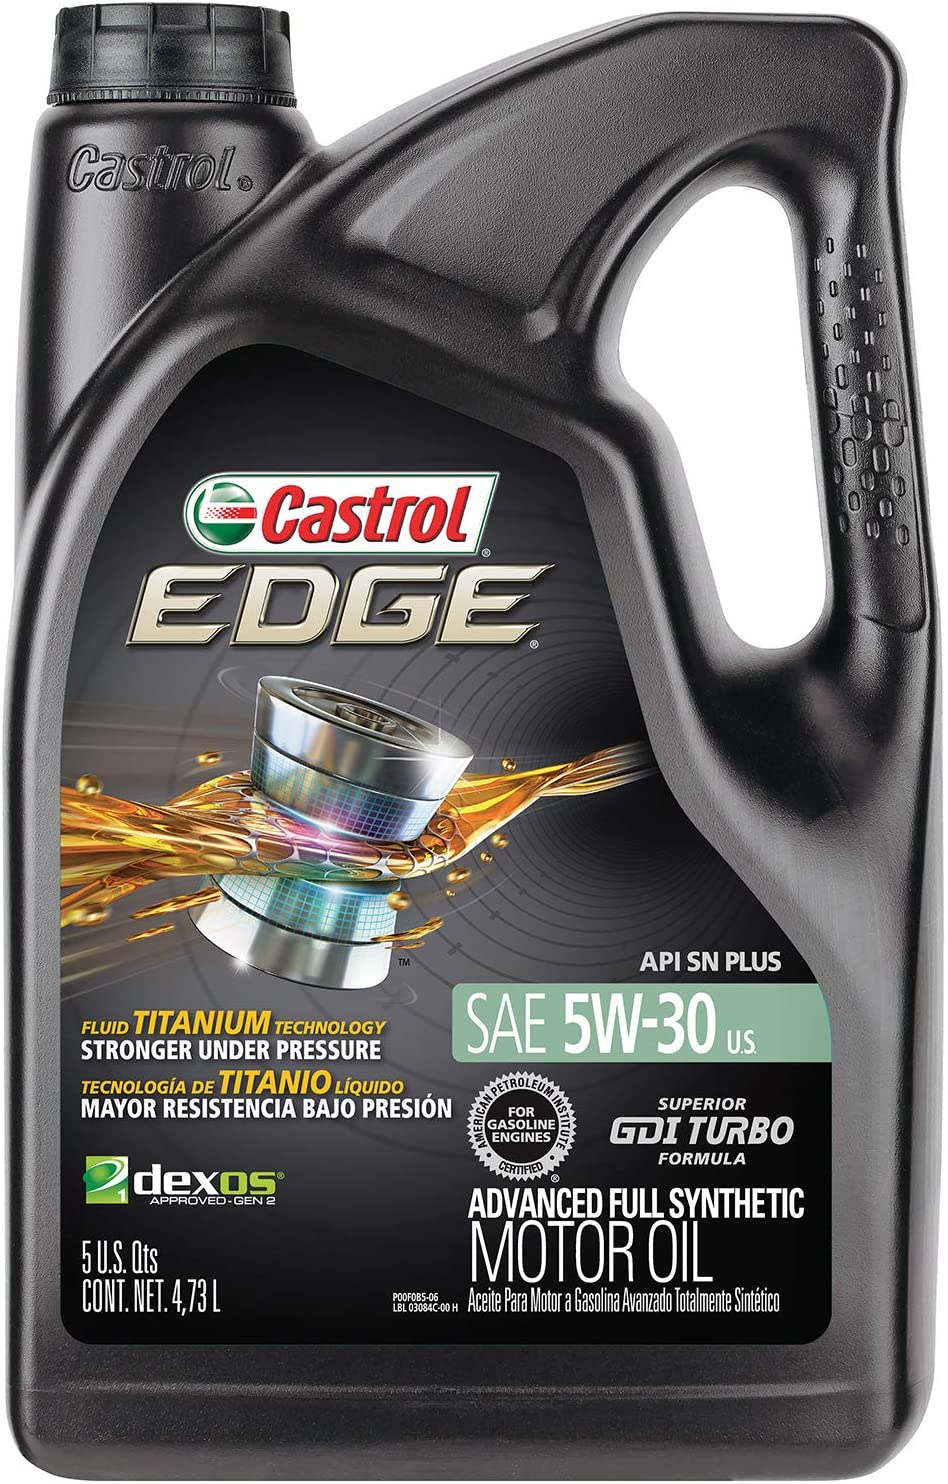 Castrol 03084 EDGE 5W-30 Advanced Full Synthetic Motor Oil